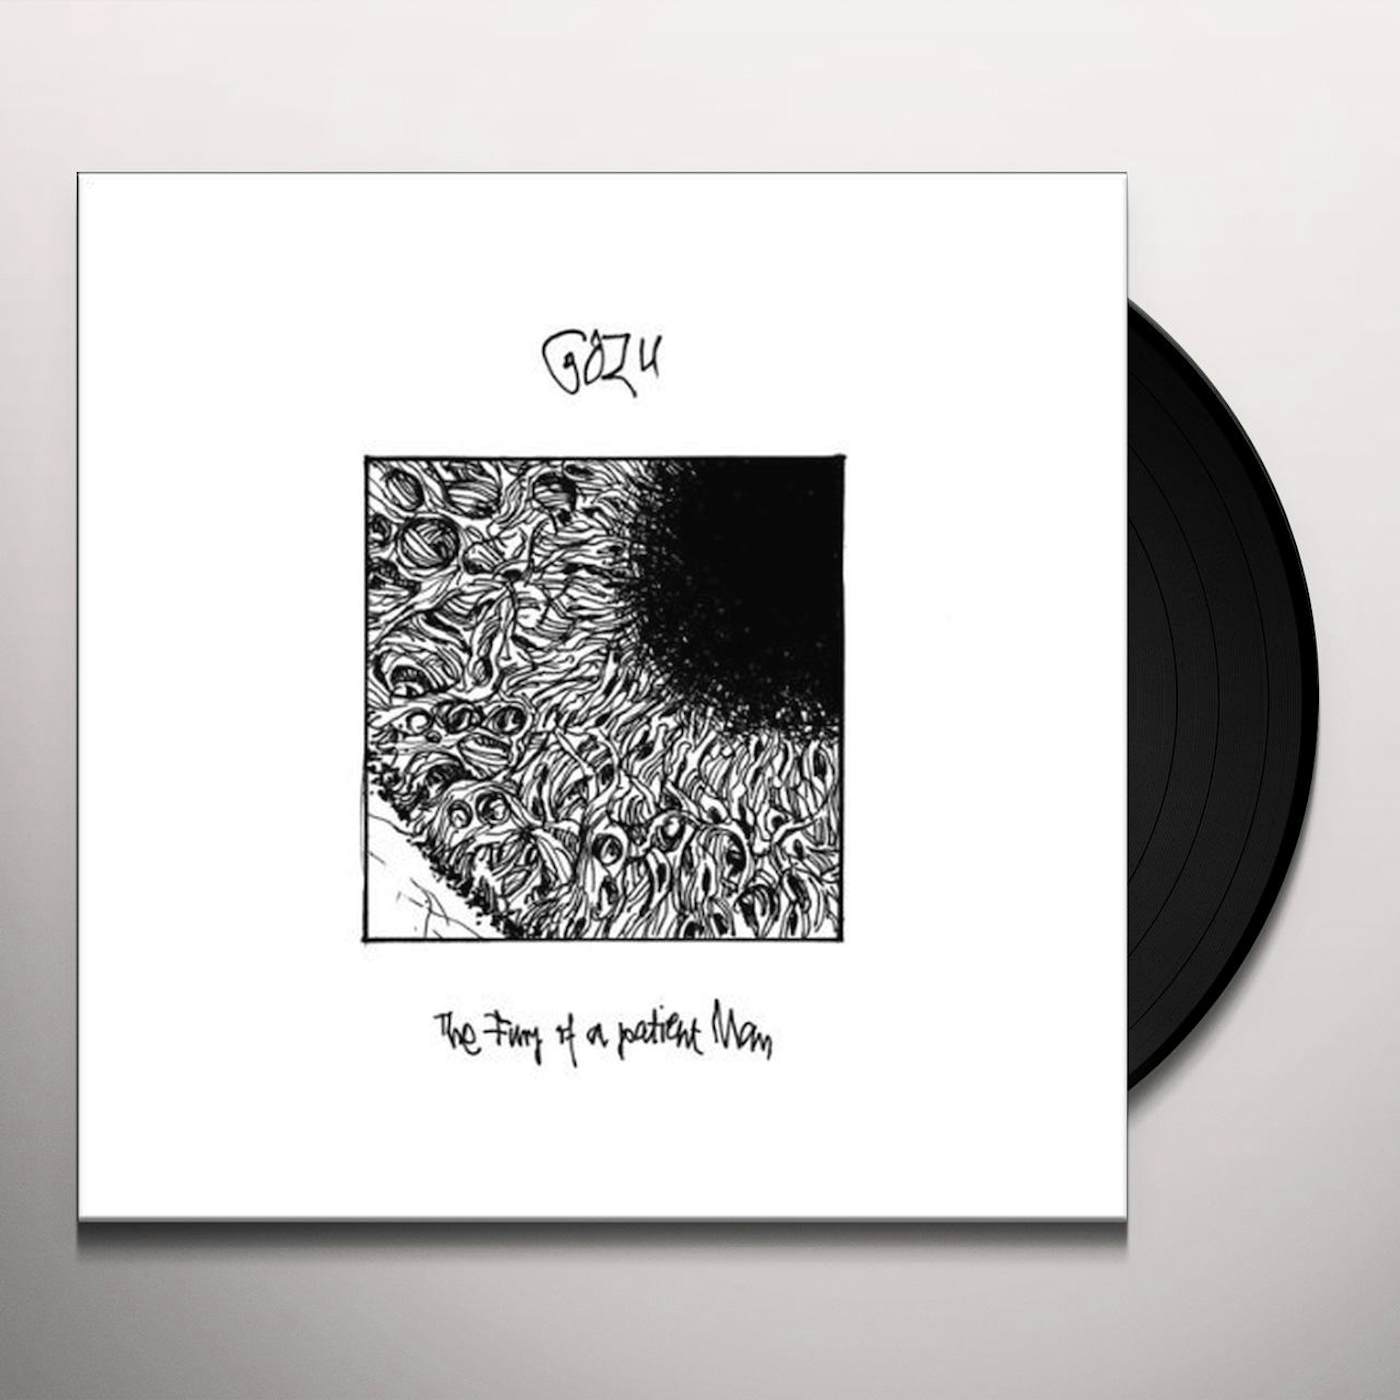 Gozu FURY OF A PATIENT MAN Vinyl Record